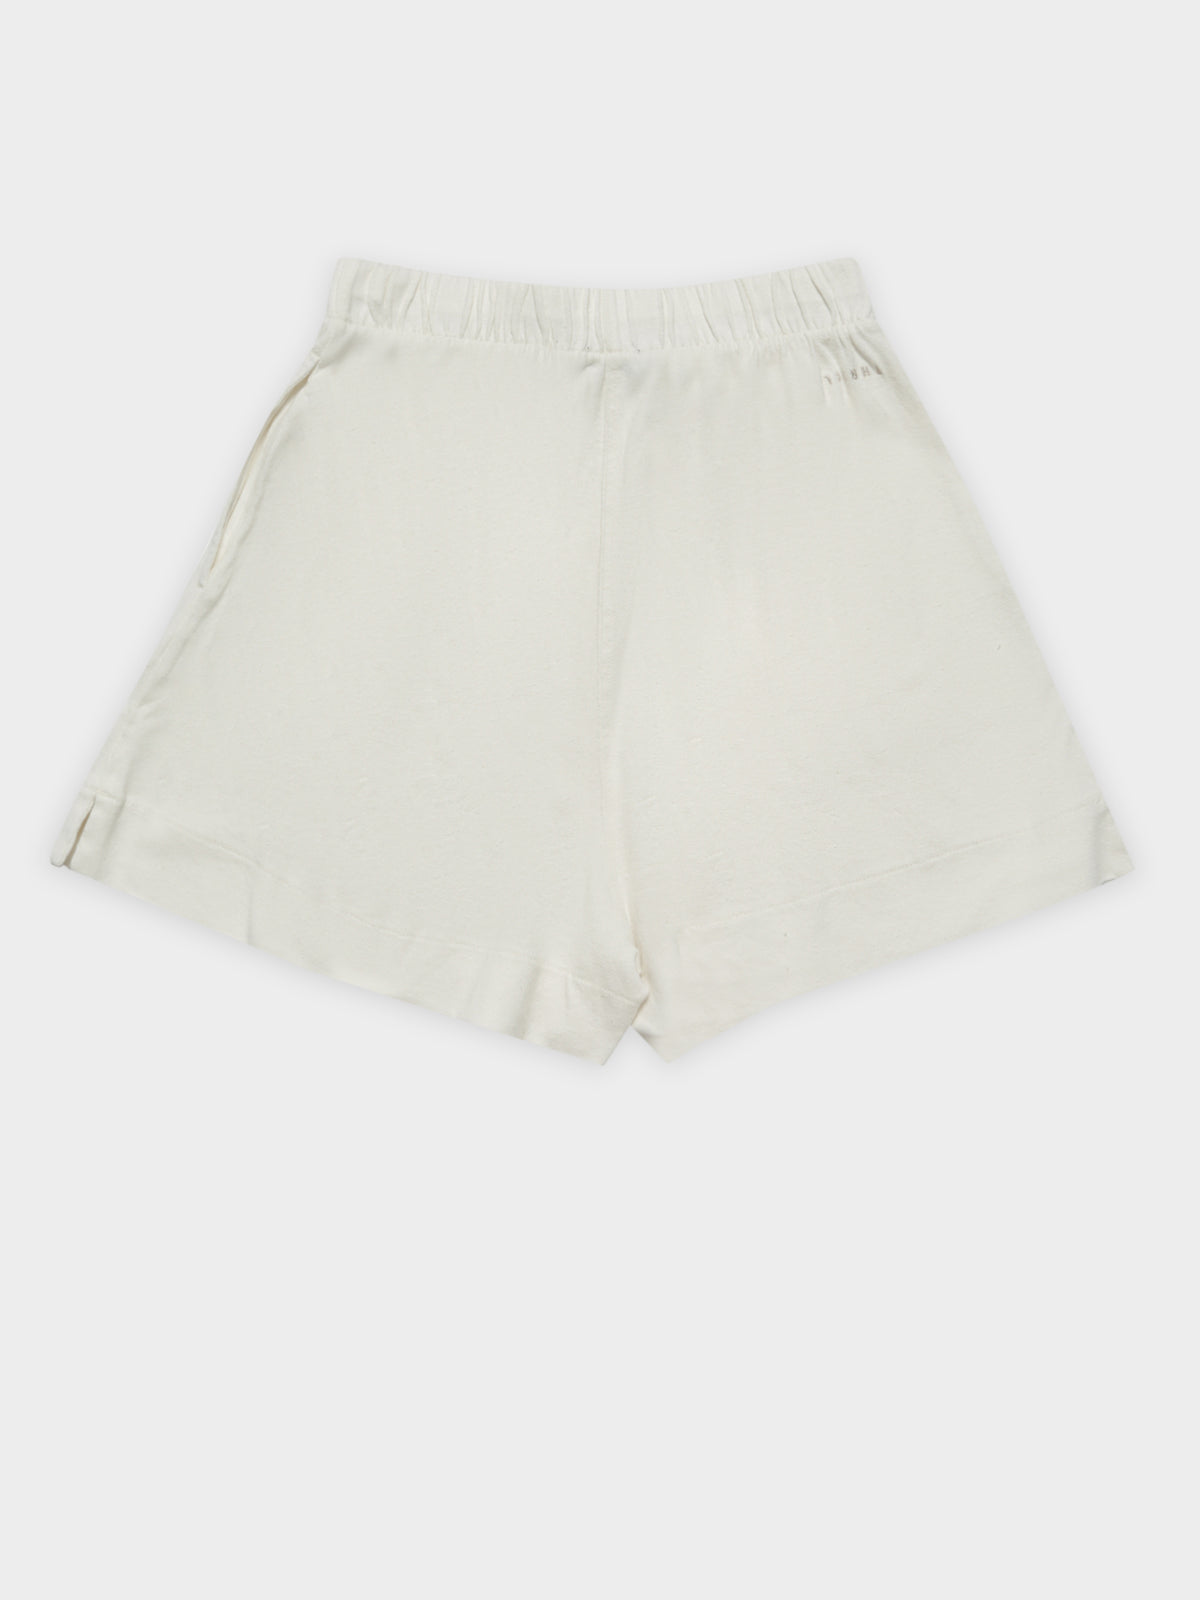 Hemp Field Shorts in Dirty White